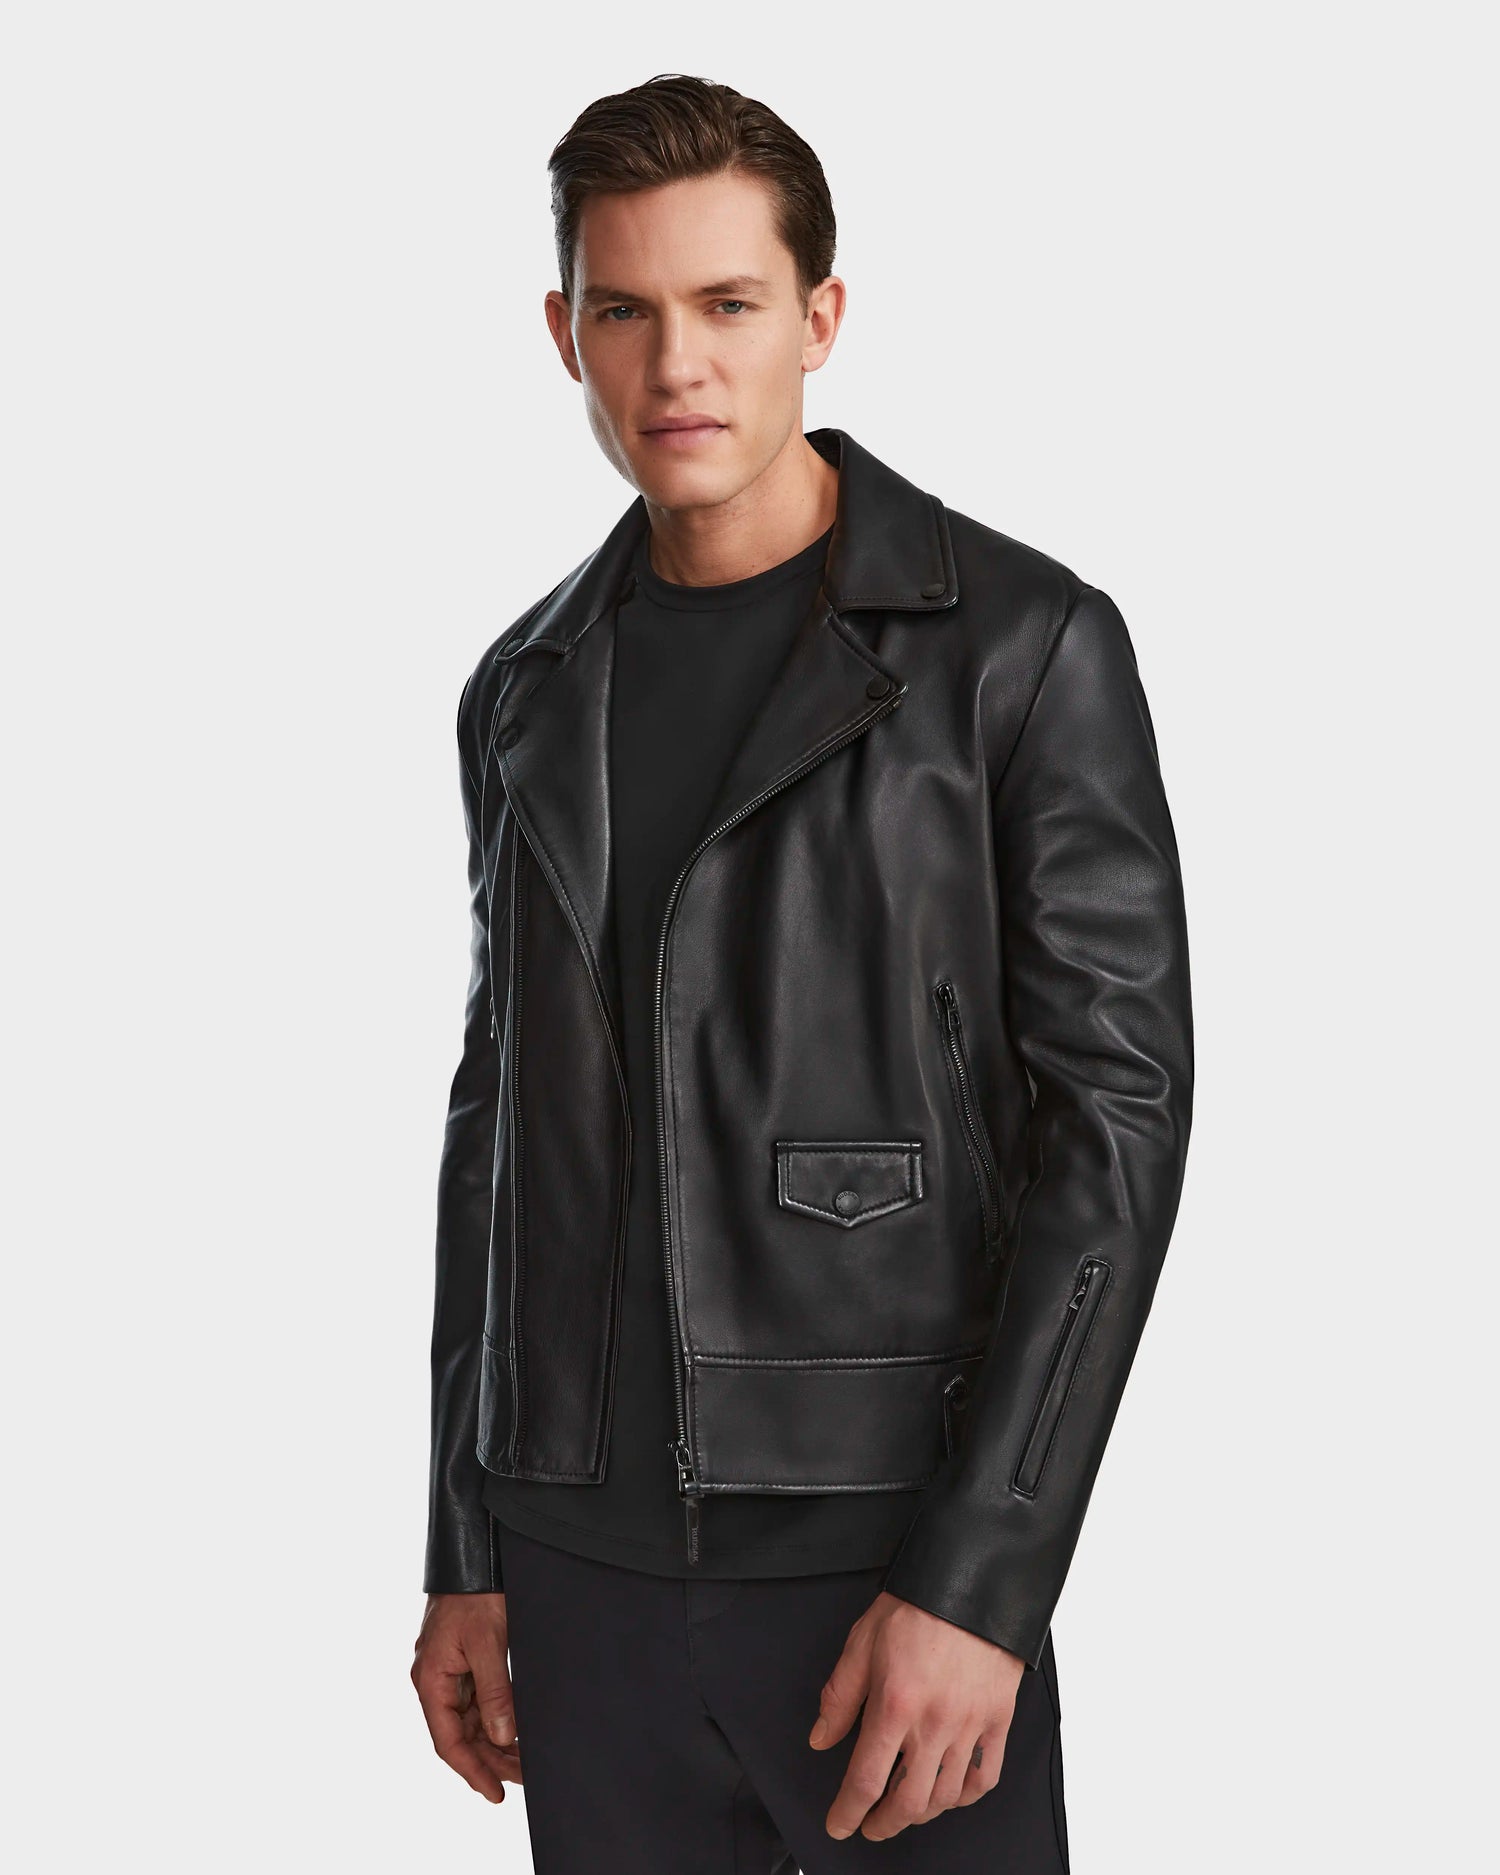 Men's leather jacket DAREG BLACK | RUDSAK – Rudsak